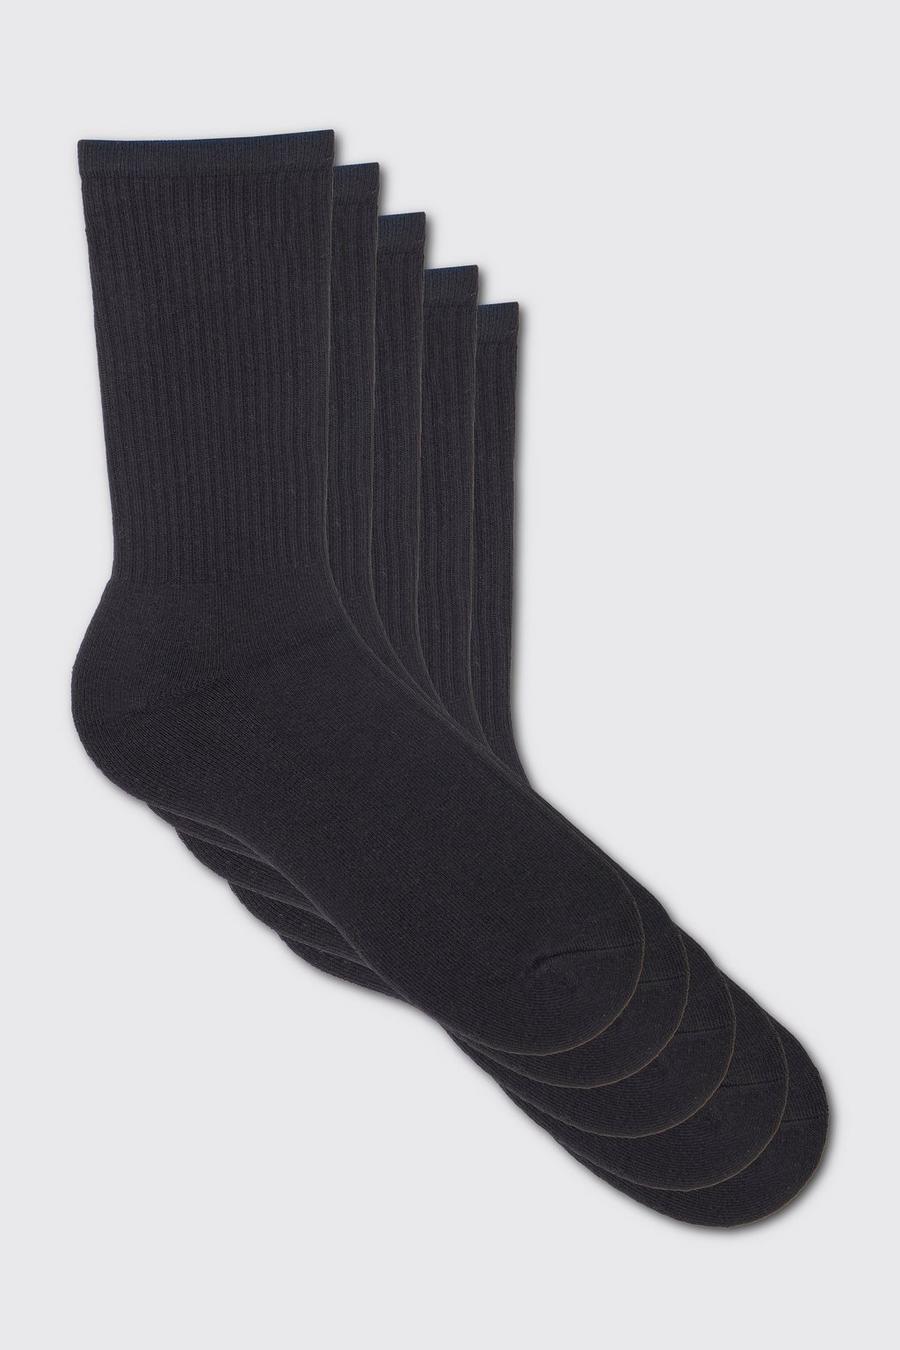 Black noir 5 Plain Sports Socks